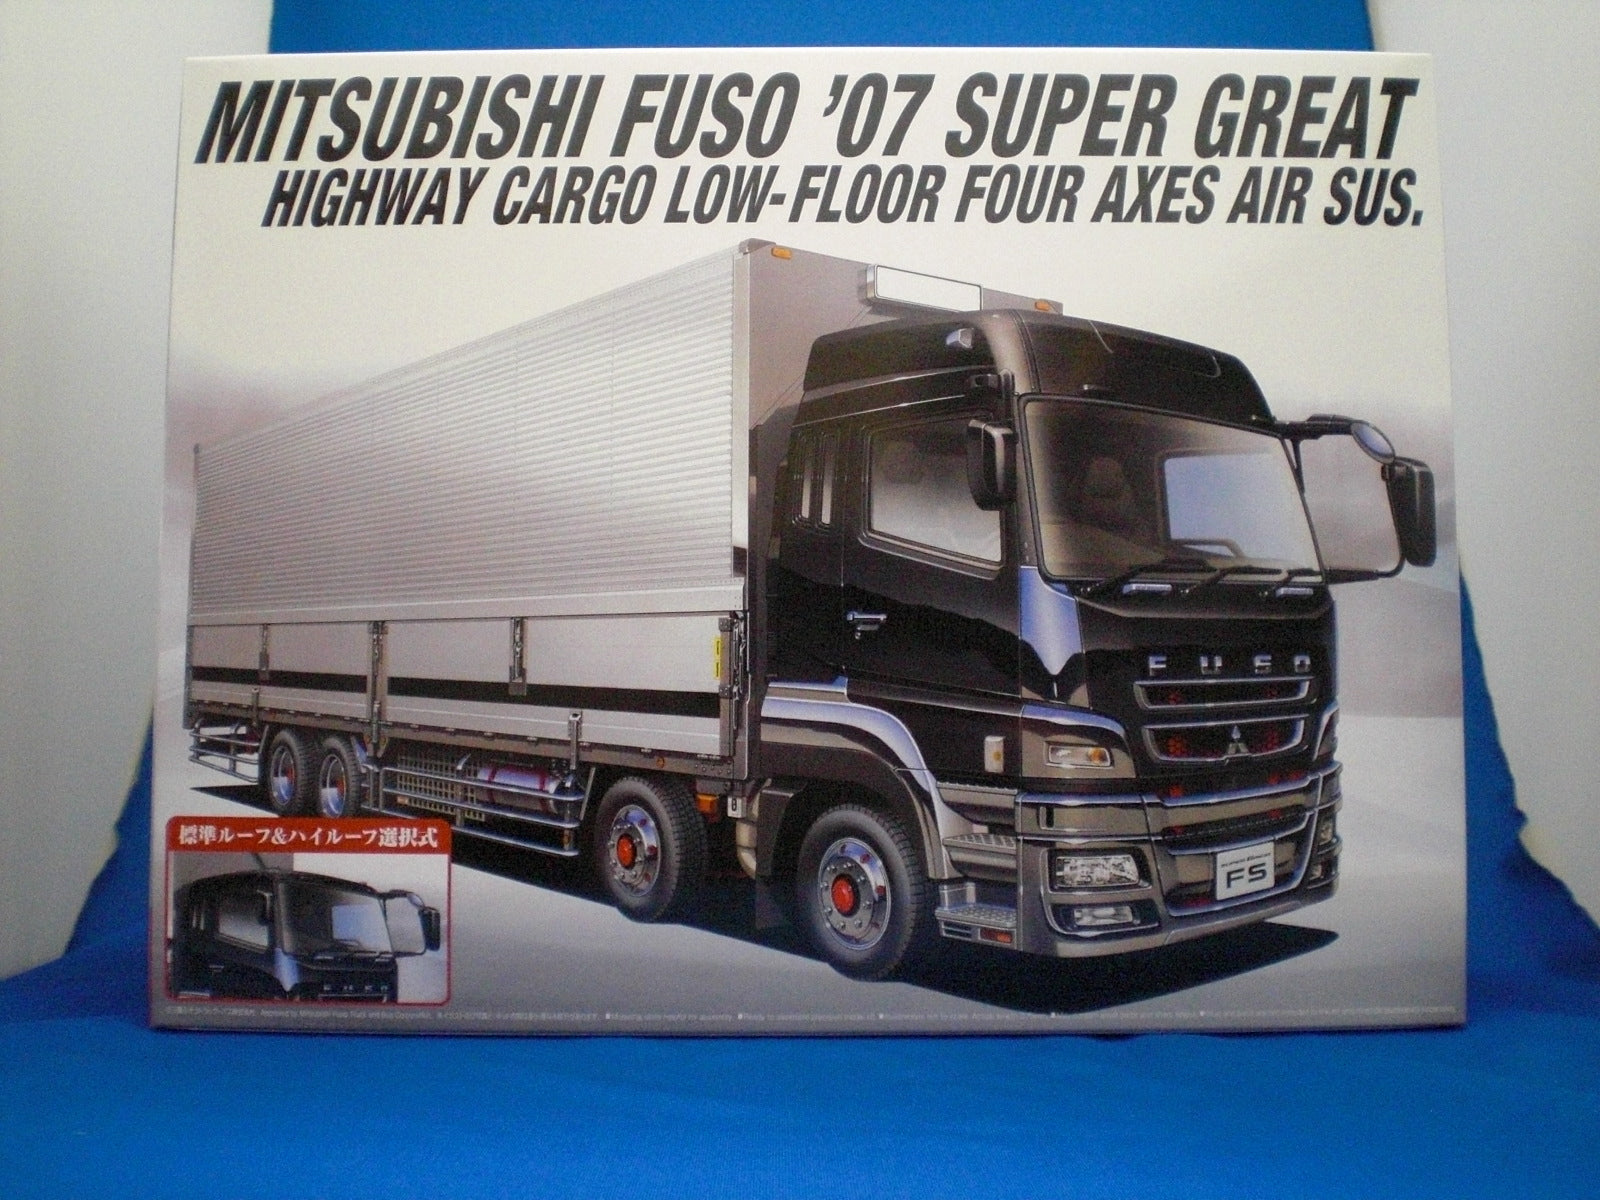 Mitsubishi Fusou `07 Super Great Highway Cargo Low-Floor Four